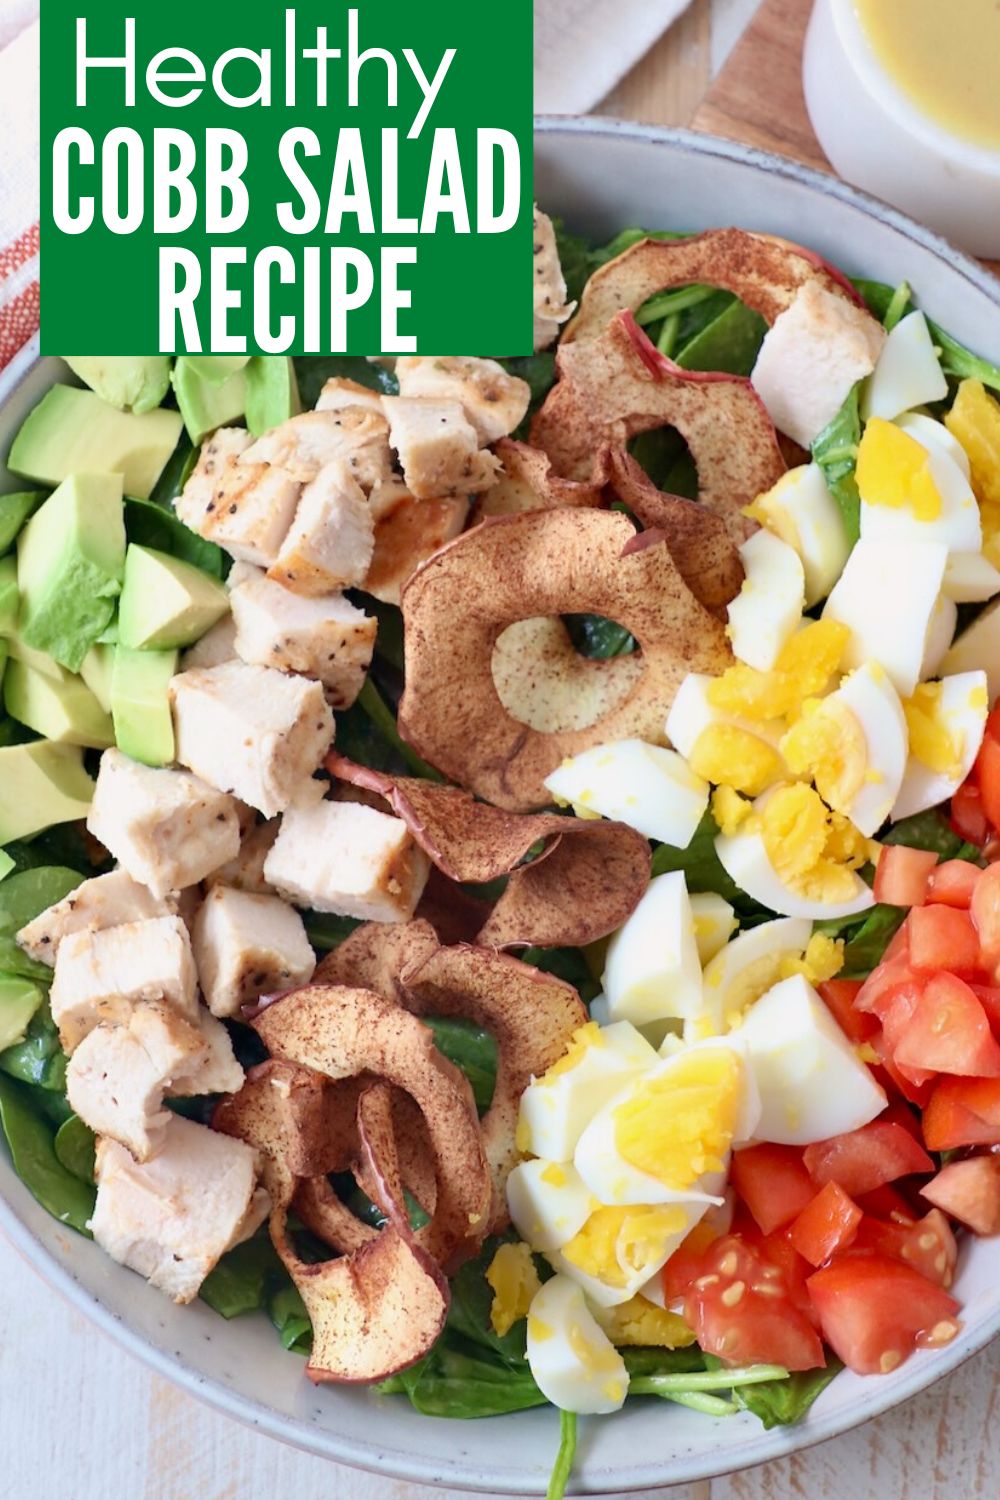 Healthy Cobb Salad Recipe - WhitneyBond.com